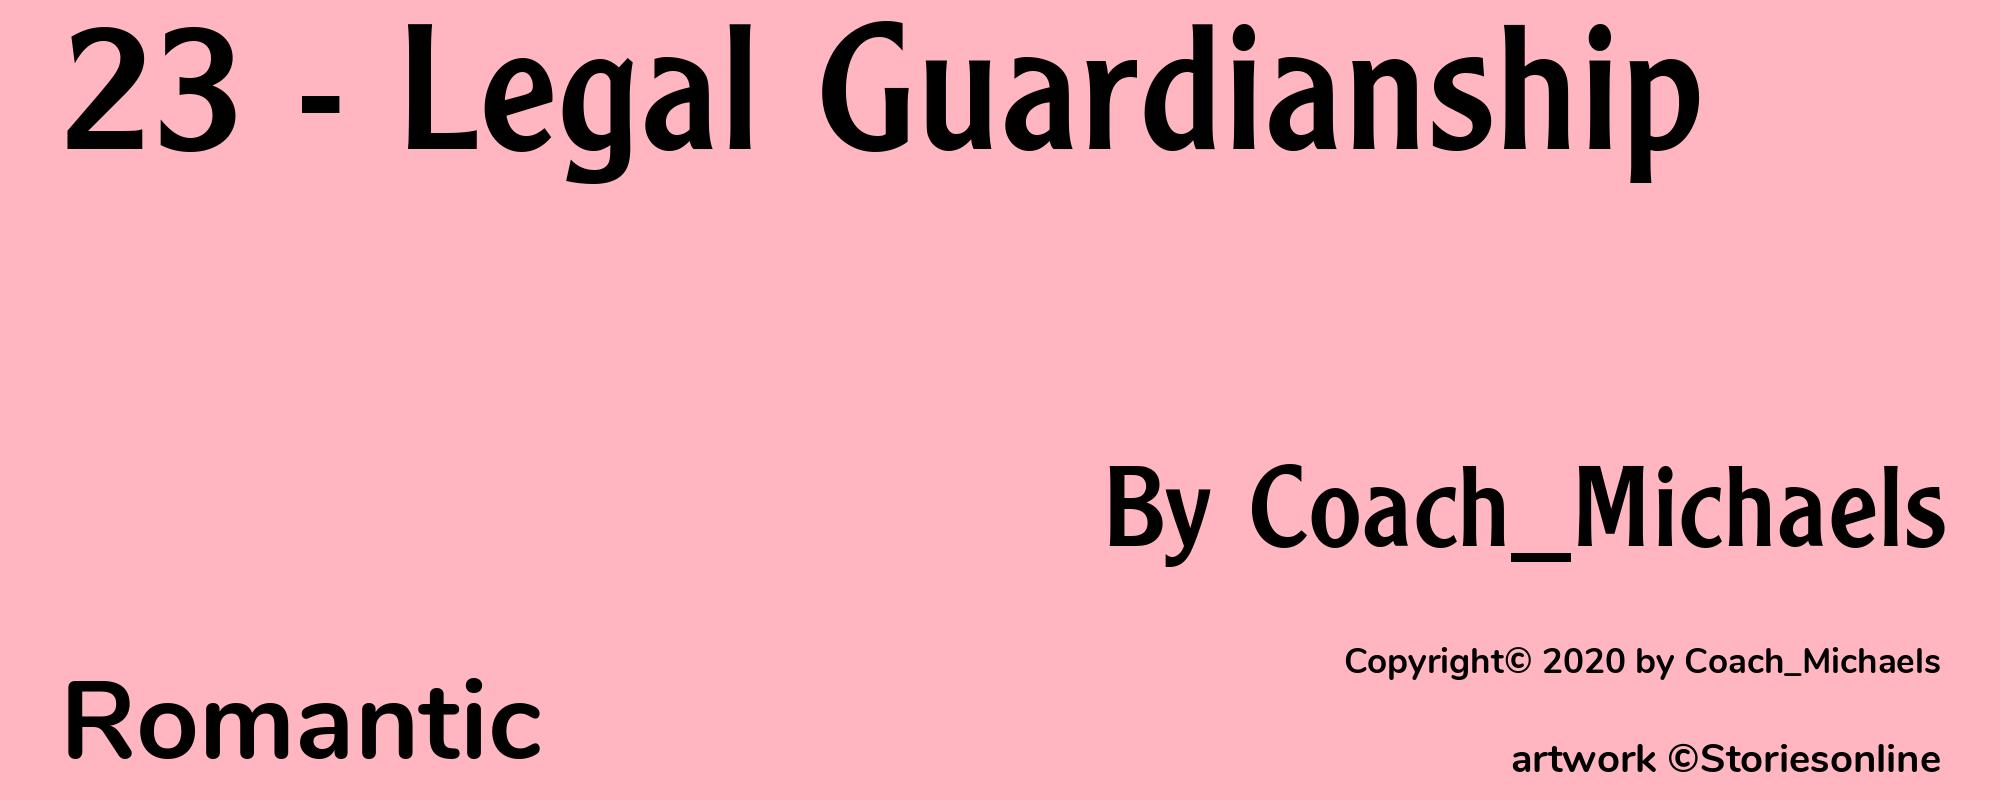 23 - Legal Guardianship - Cover